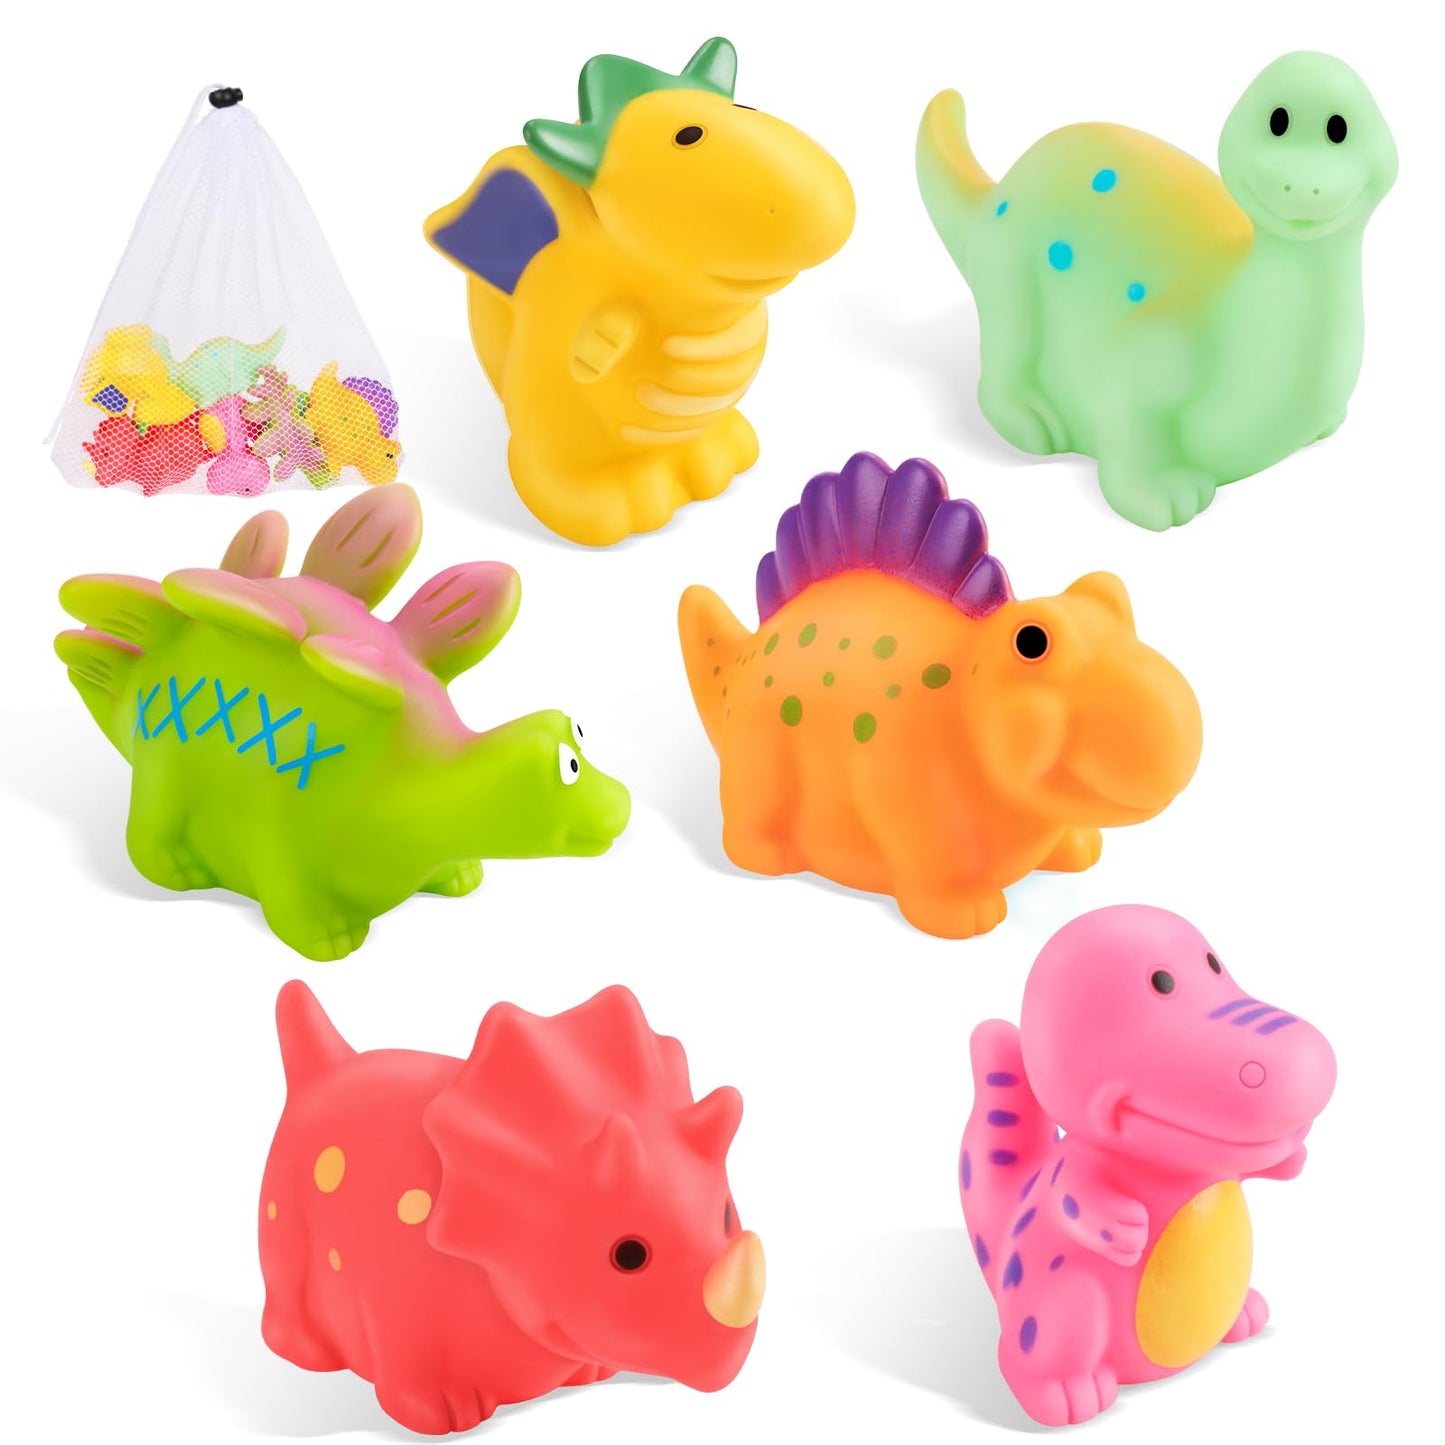 Whale Bath Toy Rechargeable with Dinosaur Bath Toys-Grey - Gigilli